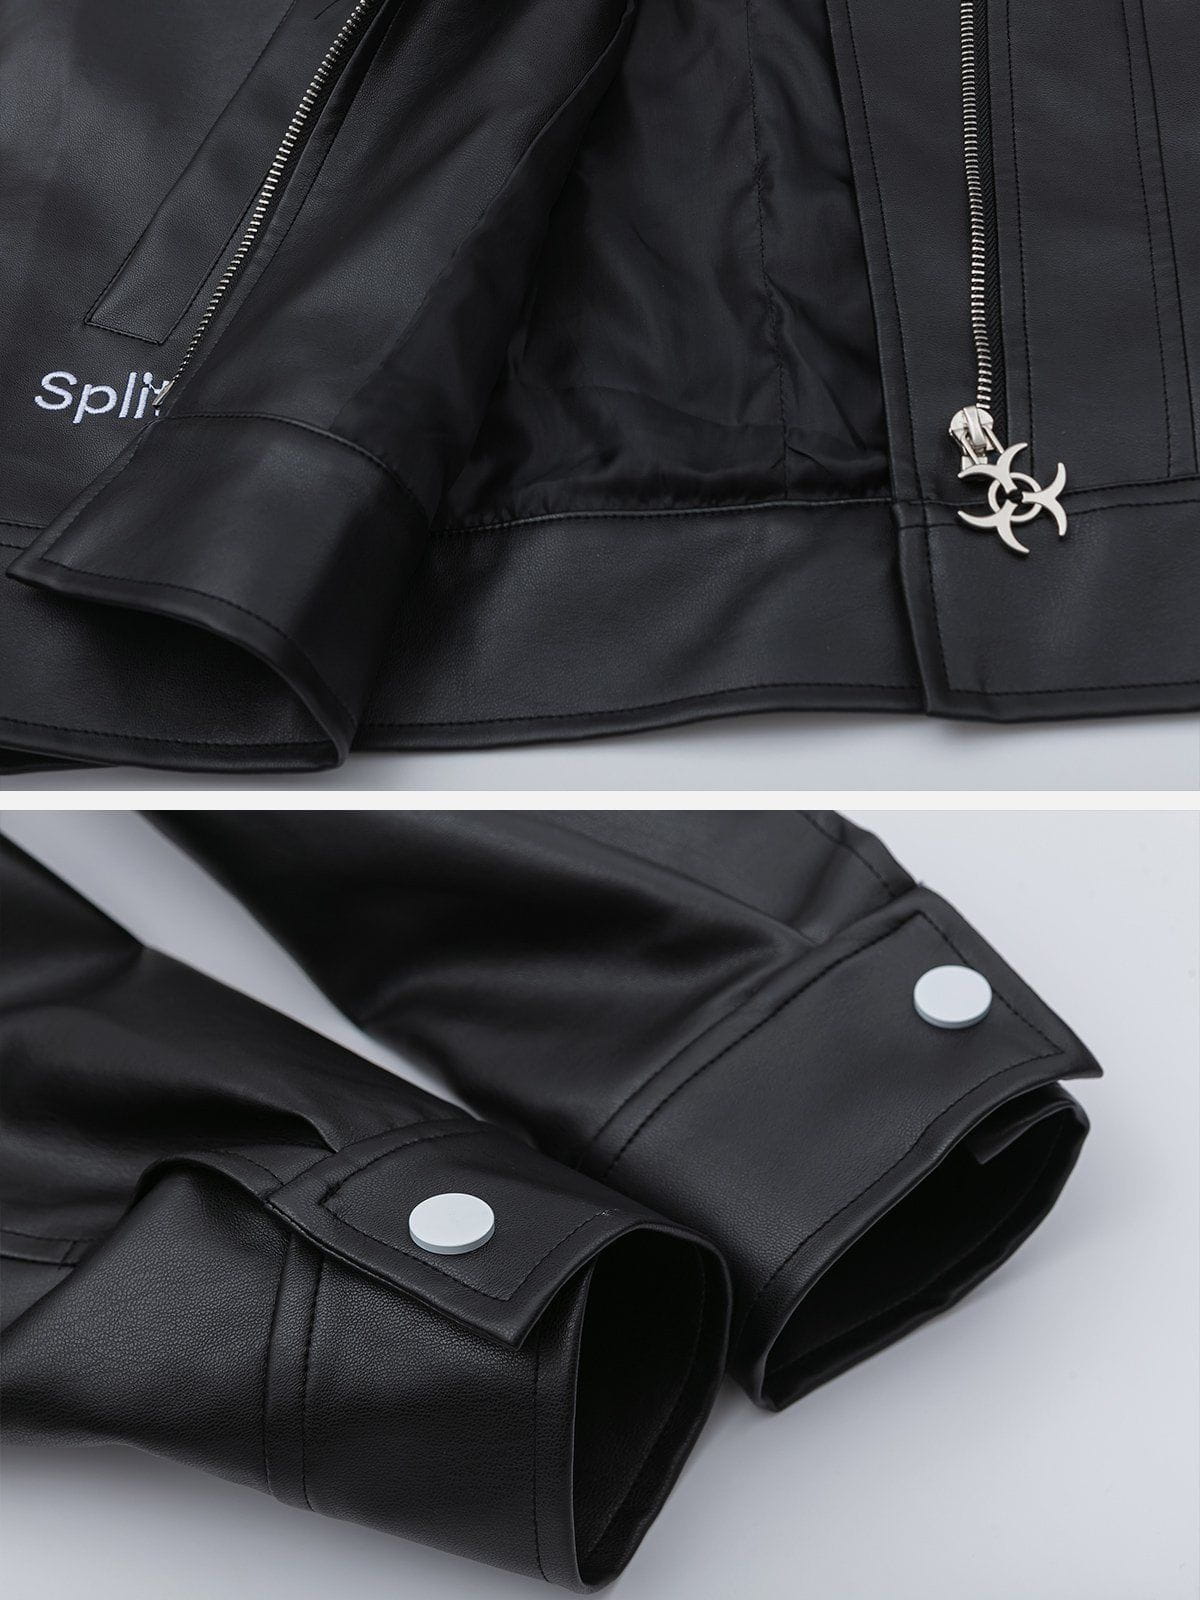 Majesda® - Inclined Zipper PU Jacket outfit ideas, streetwear fashion - majesda.com